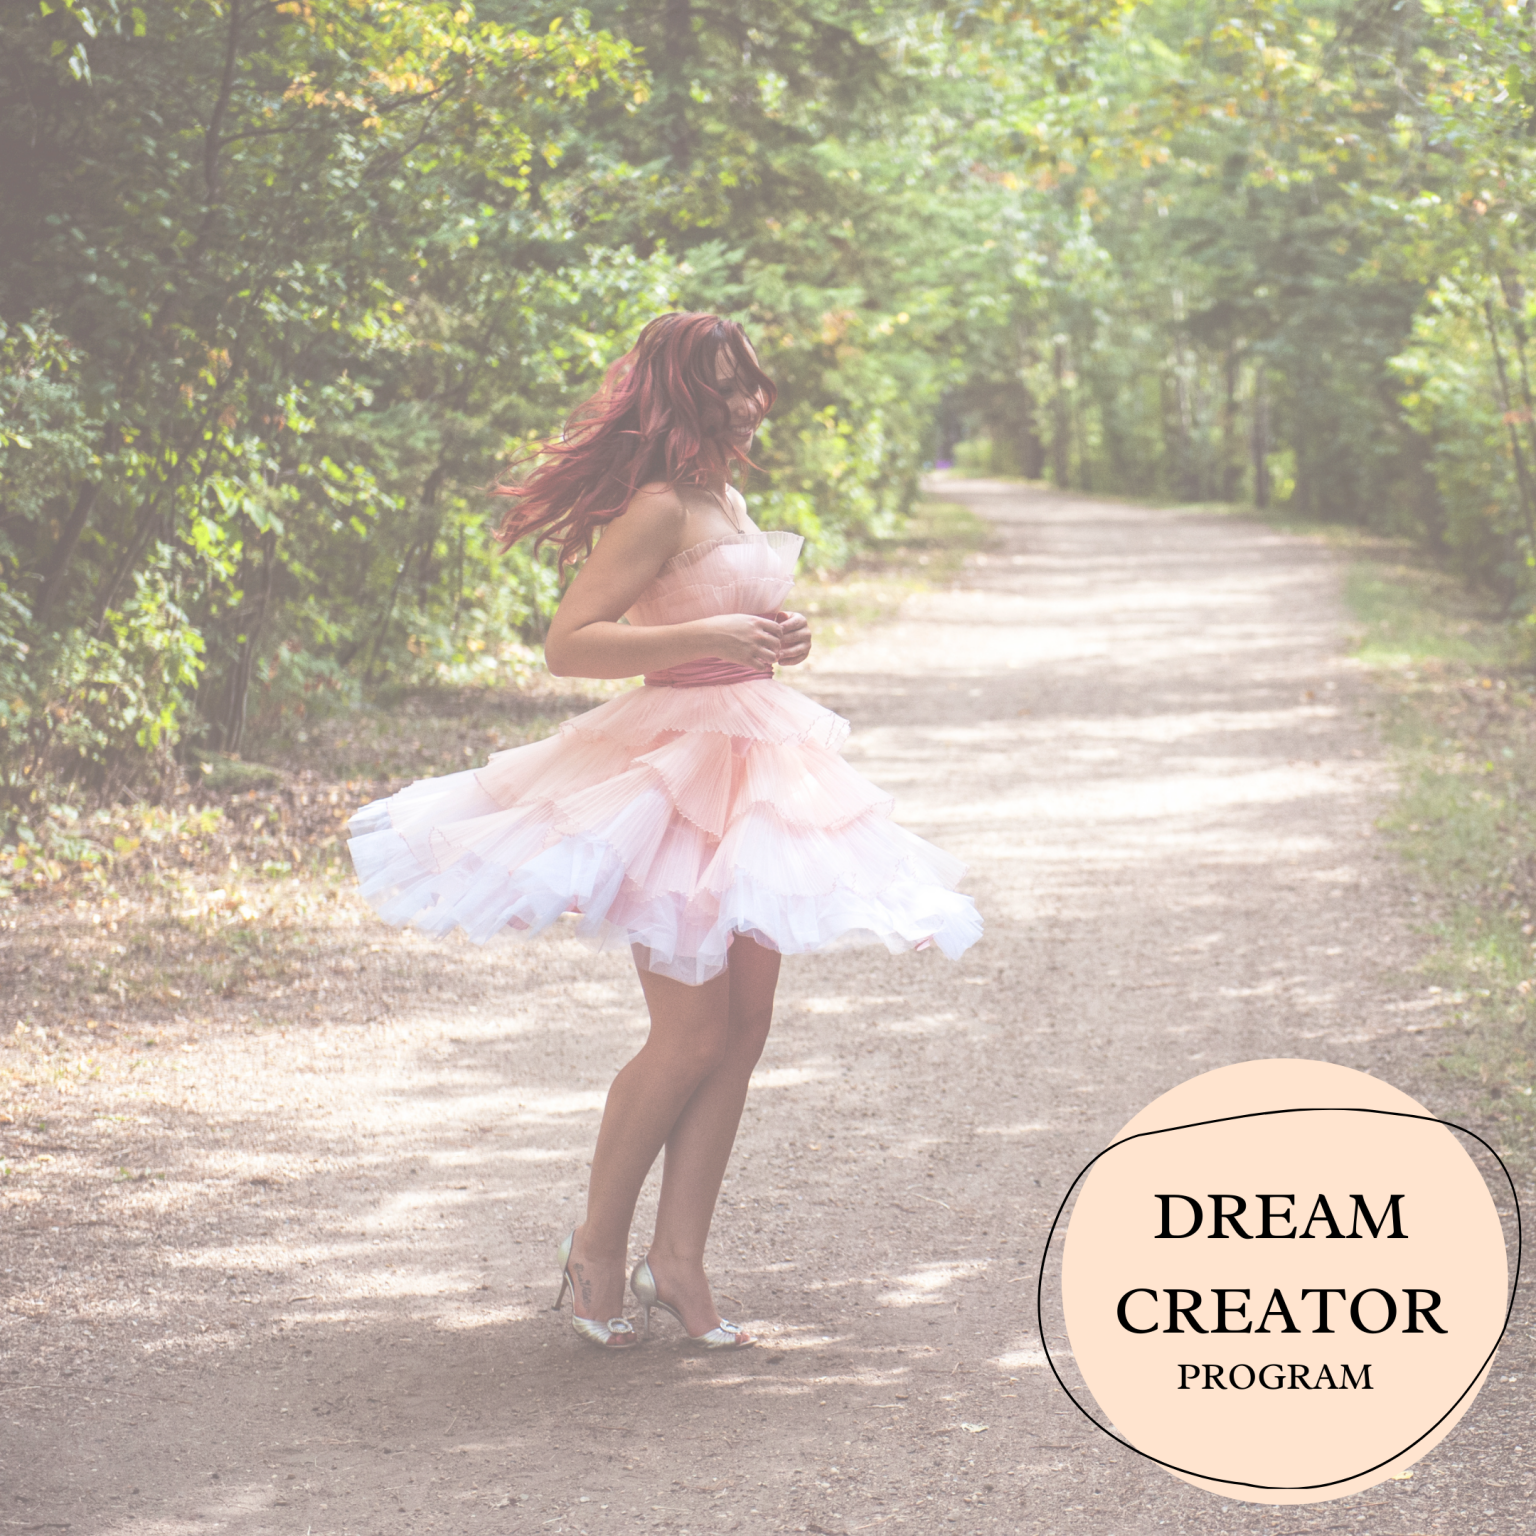 Dance your way through - dream creator program